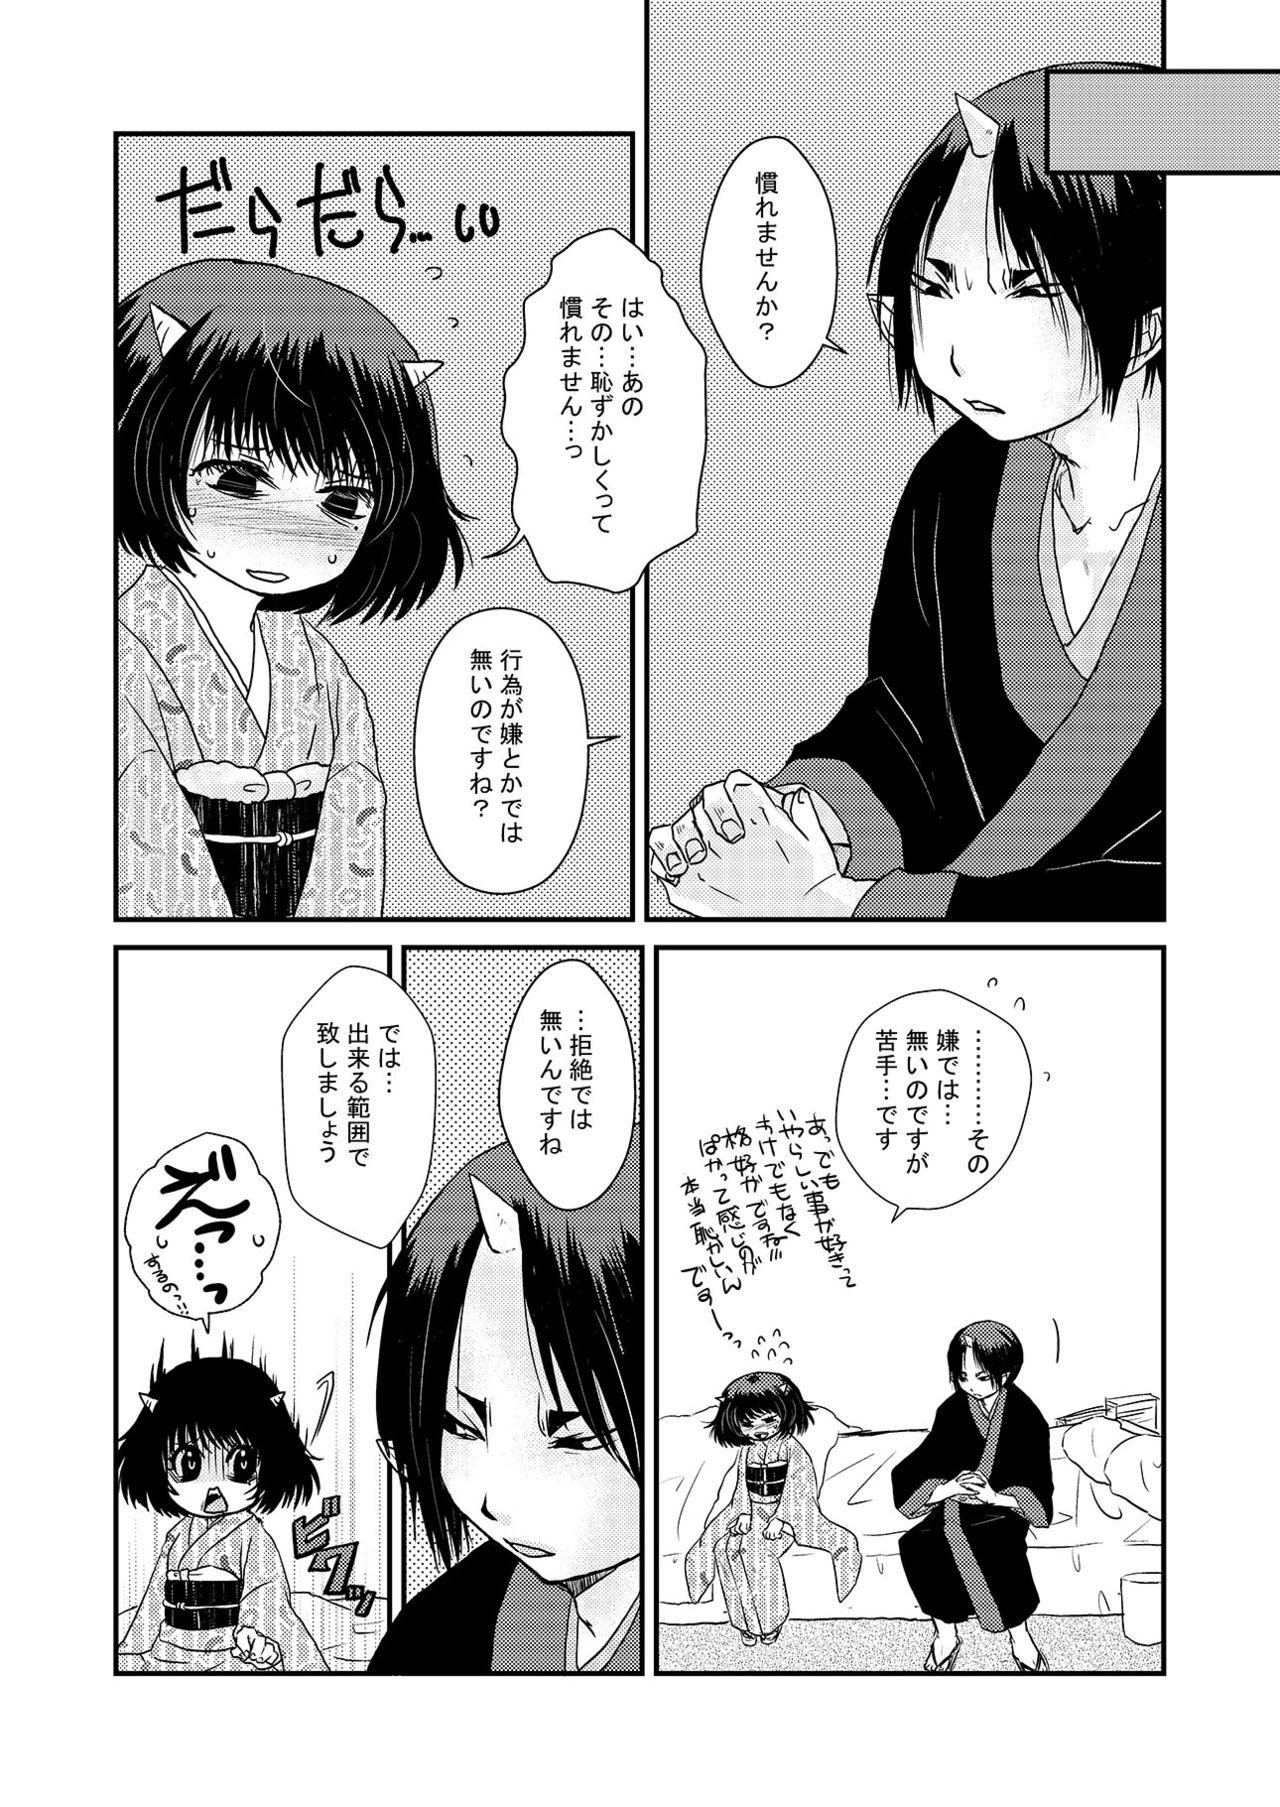 Latex 【鬼マキ】同衾のススメ【同人】 - Hoozuki no reitetsu Trans - Page 4